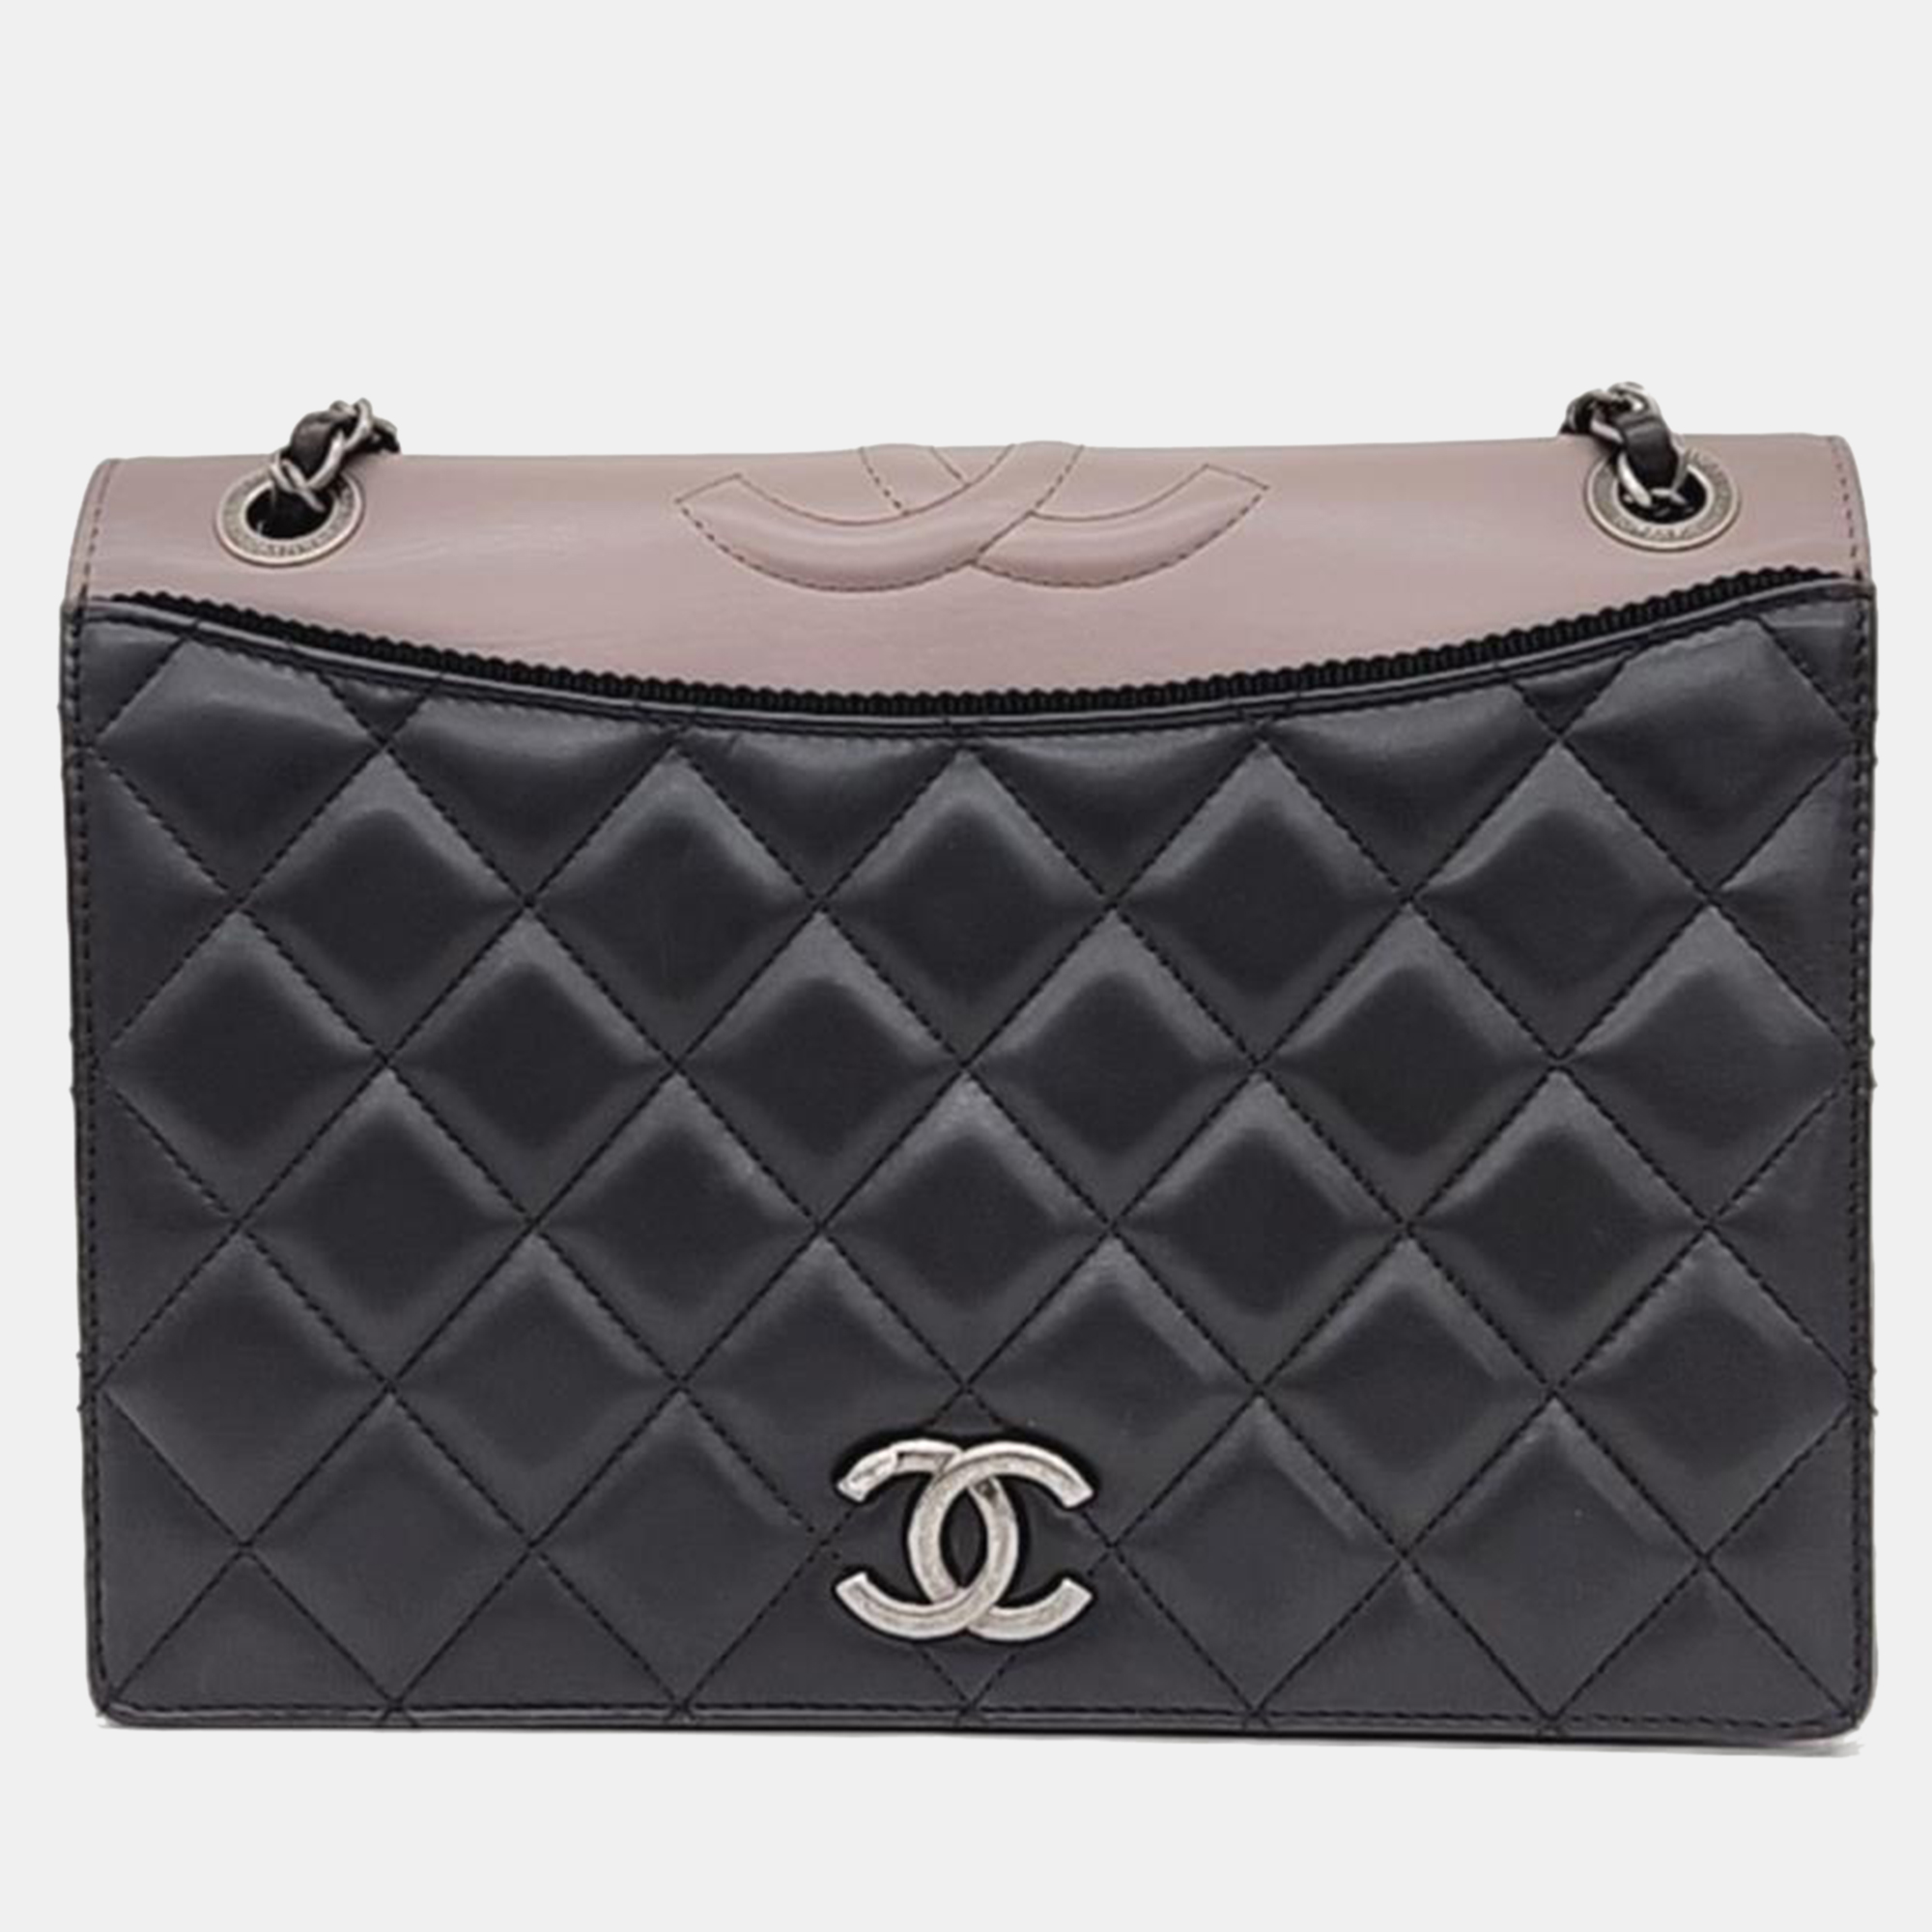 Chanel black quilted ballerine flap bag